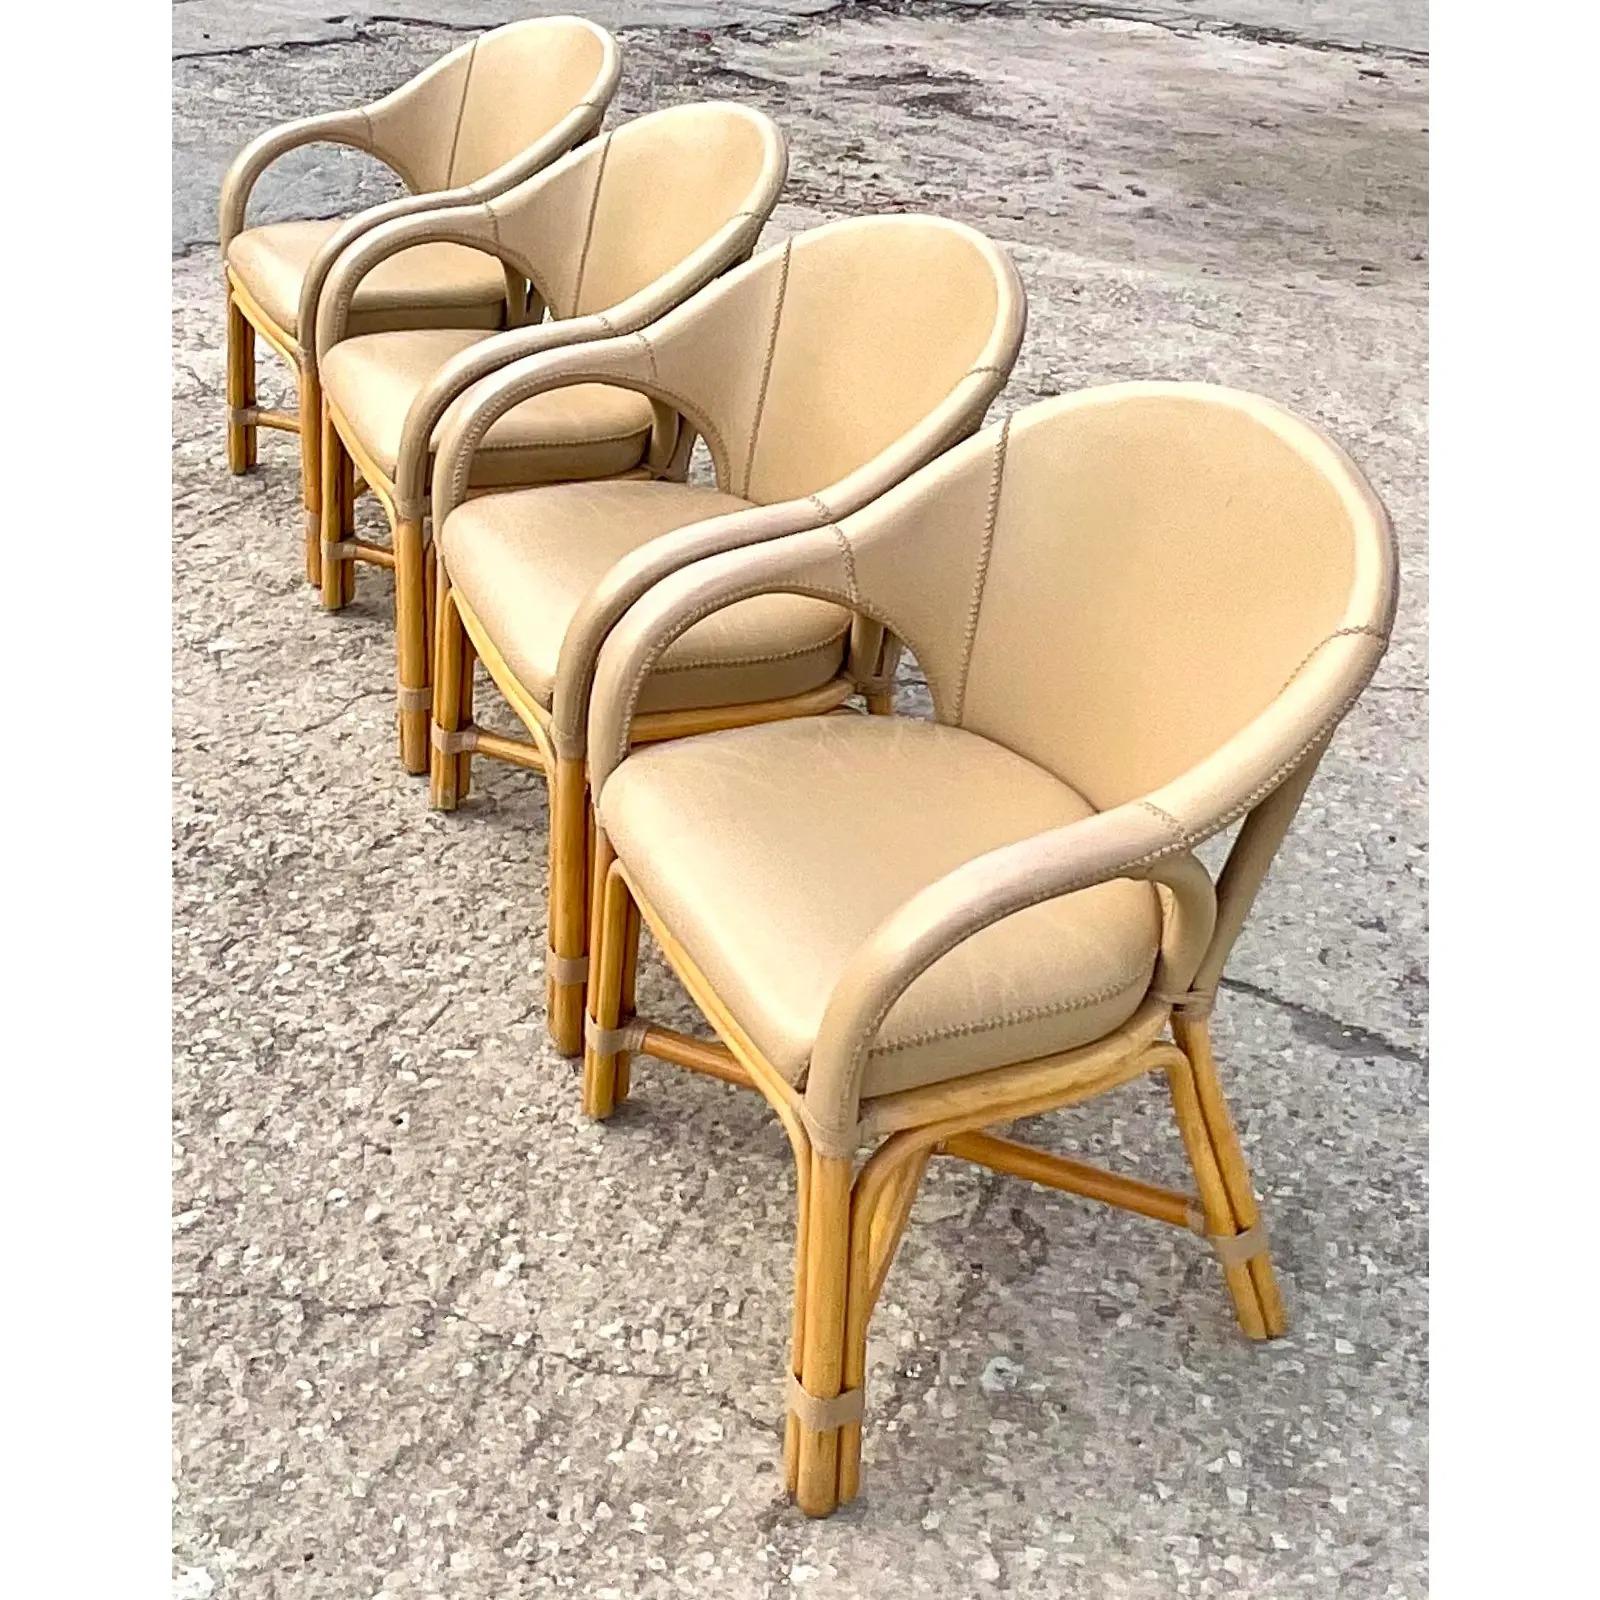 Vintage Coastal Antonio Budji Leather and Rattan Dining Chairs, Set of 4 6